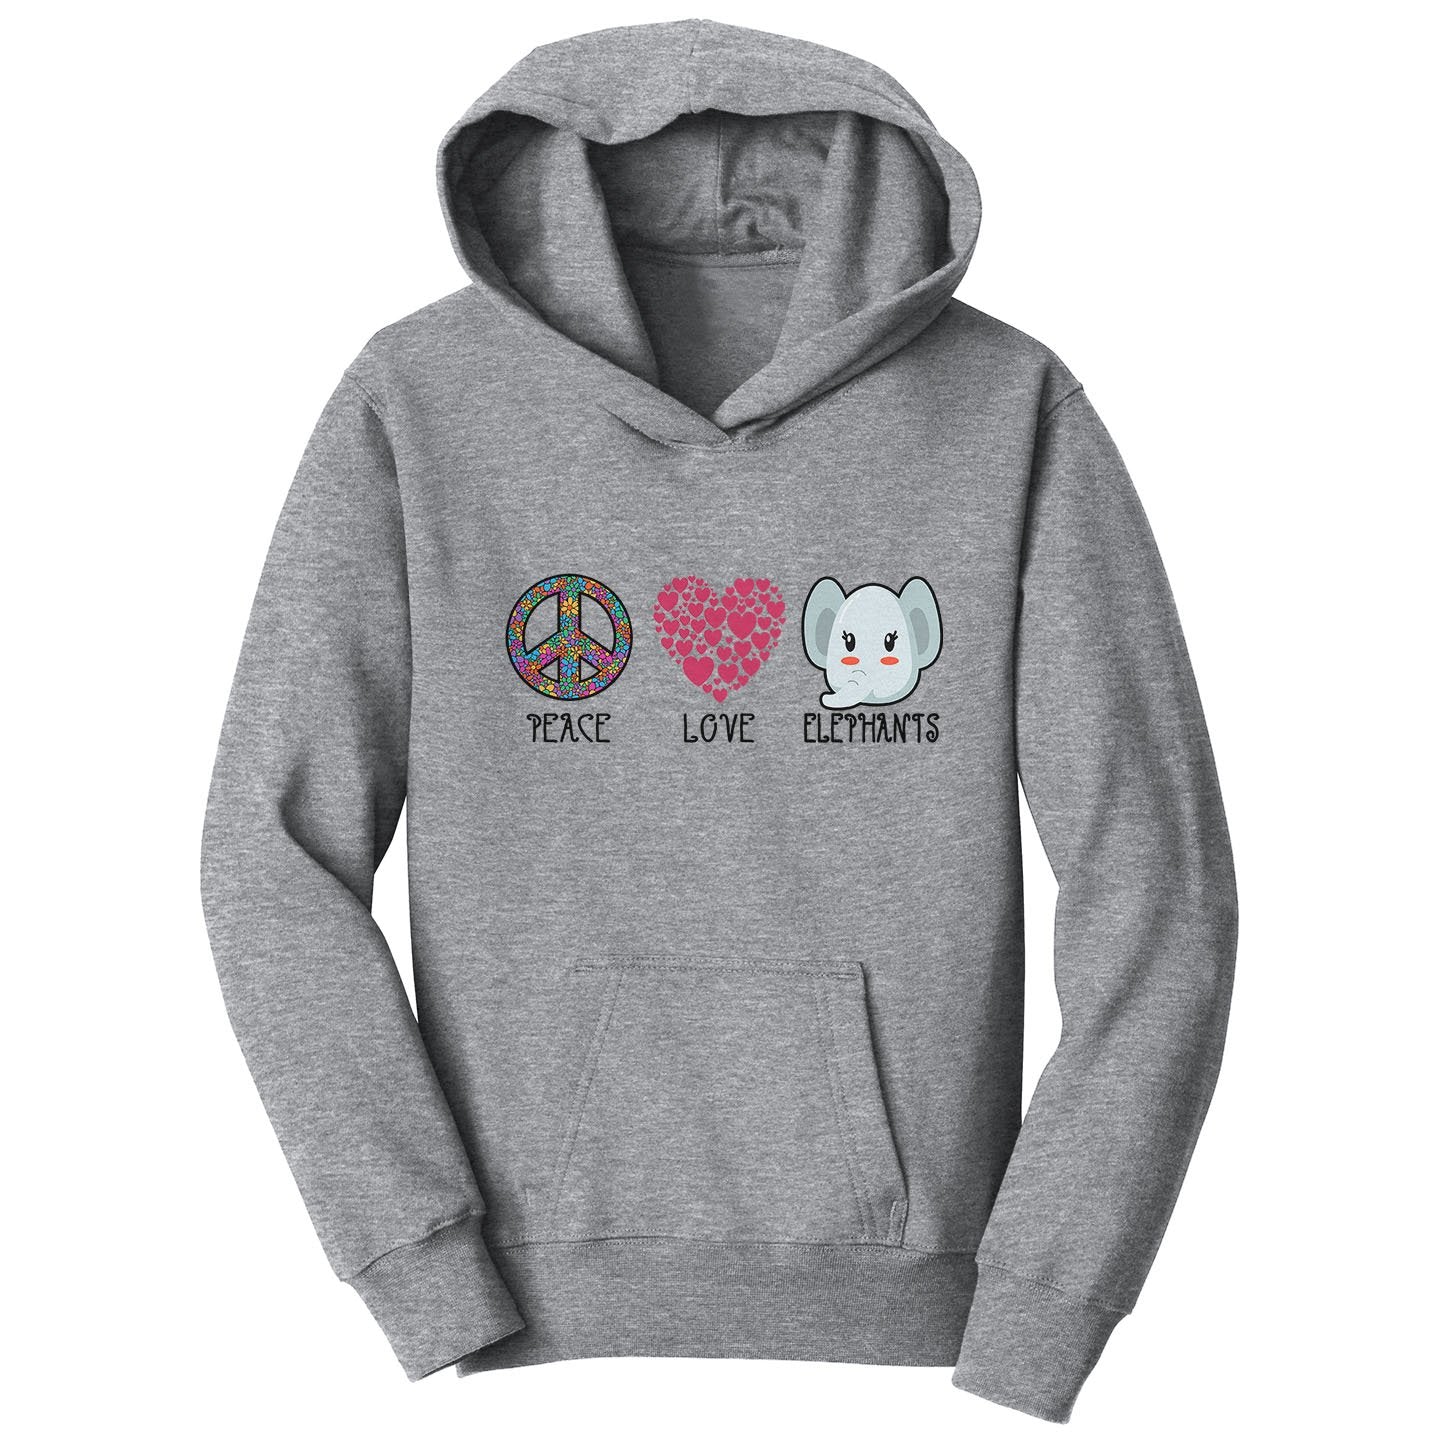 Peace Love Elephants - Kids' Unisex Hoodie Sweatshirt